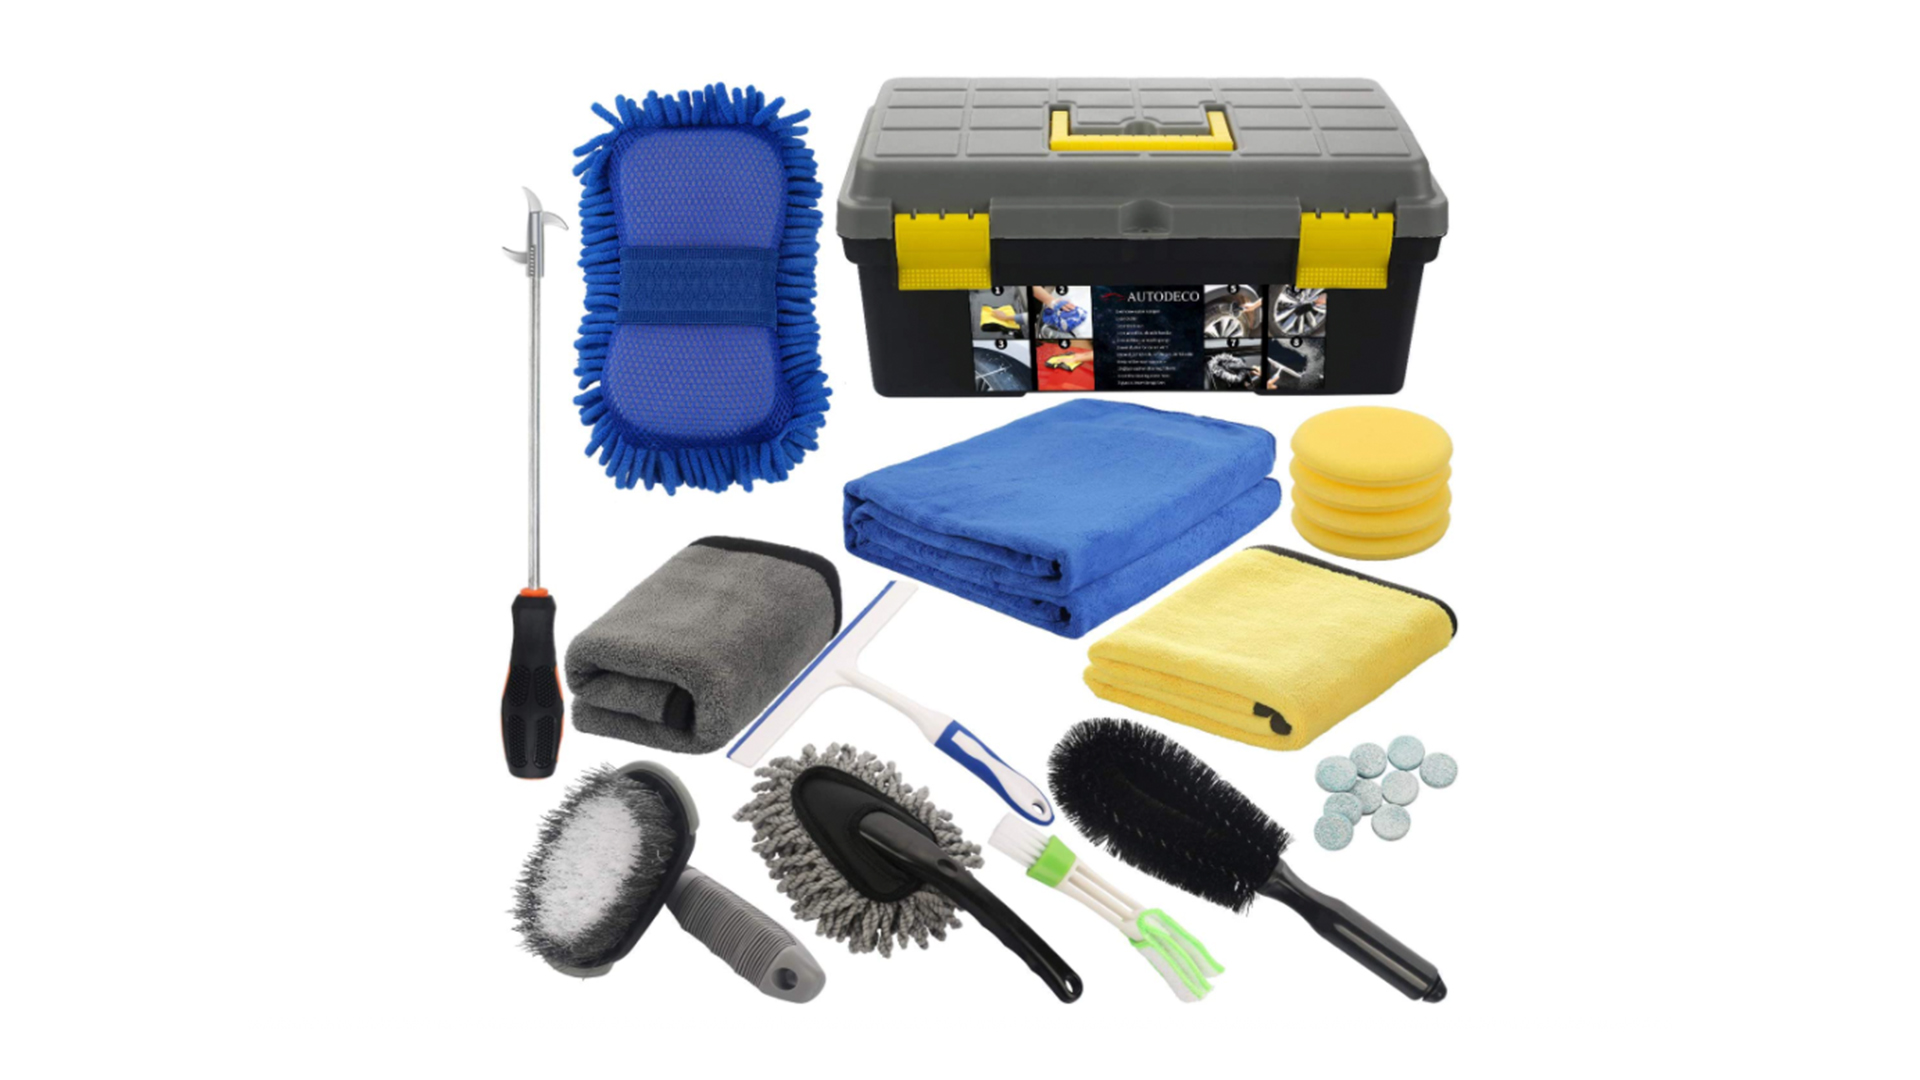  Adam's Arsenal Builder Car Cleaning Kit (16 Item) - Our Best  Value Car Detailing Kit